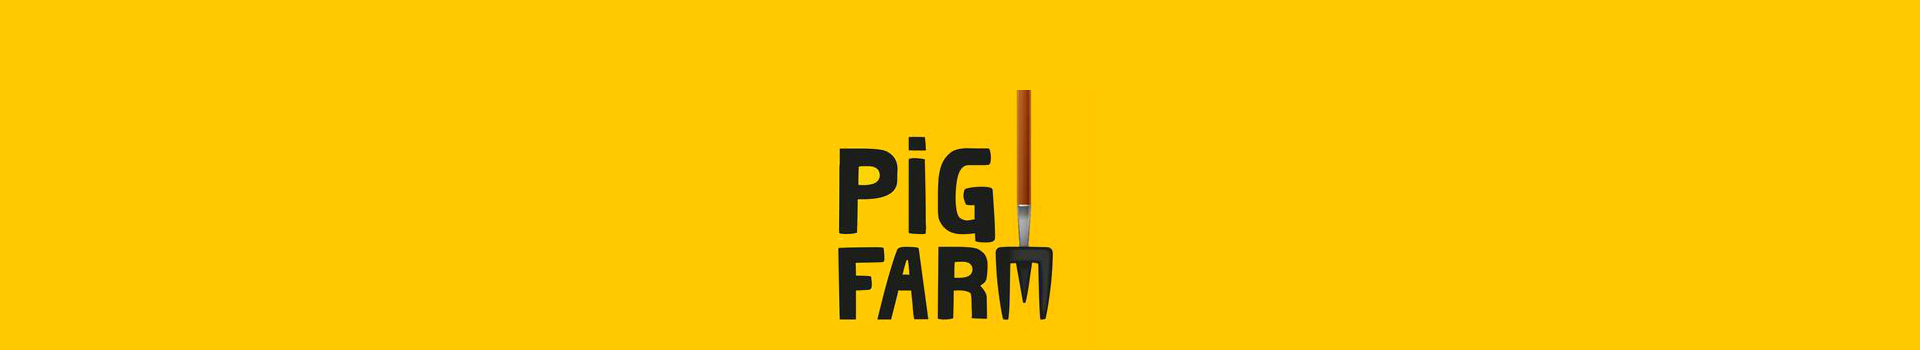 Pig Farm tickets London St. James Theatre